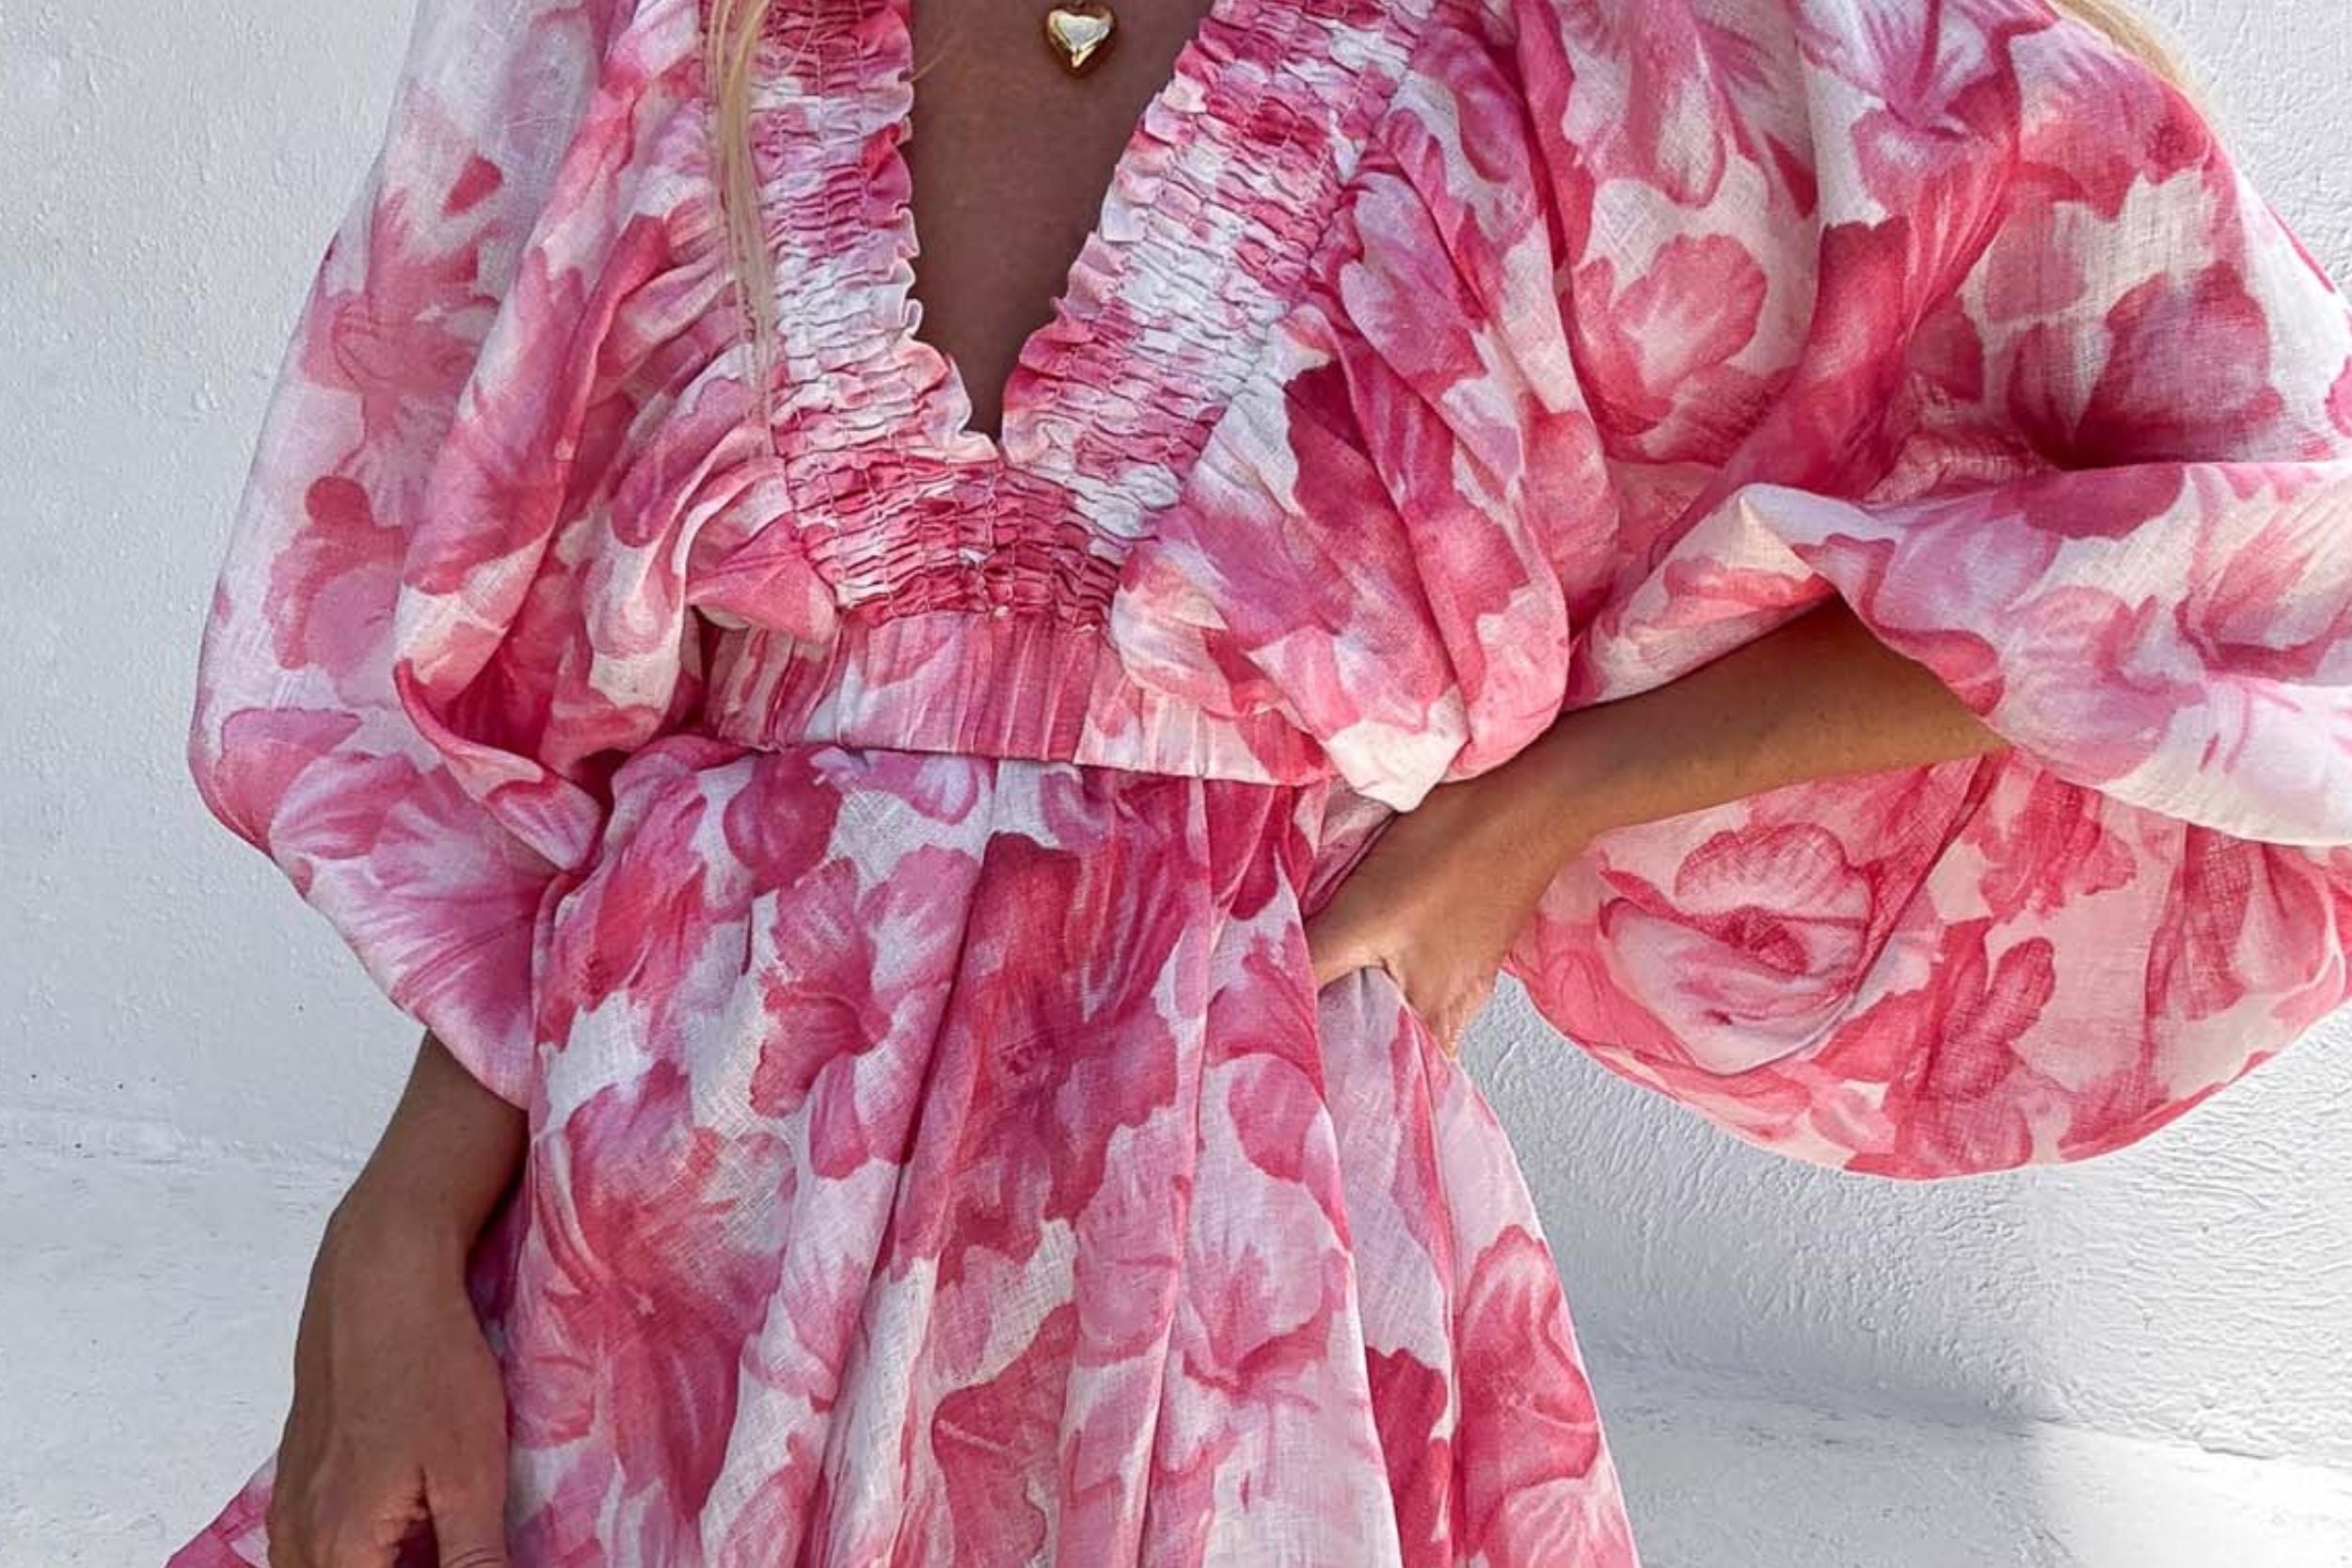 La Bohème Girls Essie V Neck Mini Dress Aloha Floral